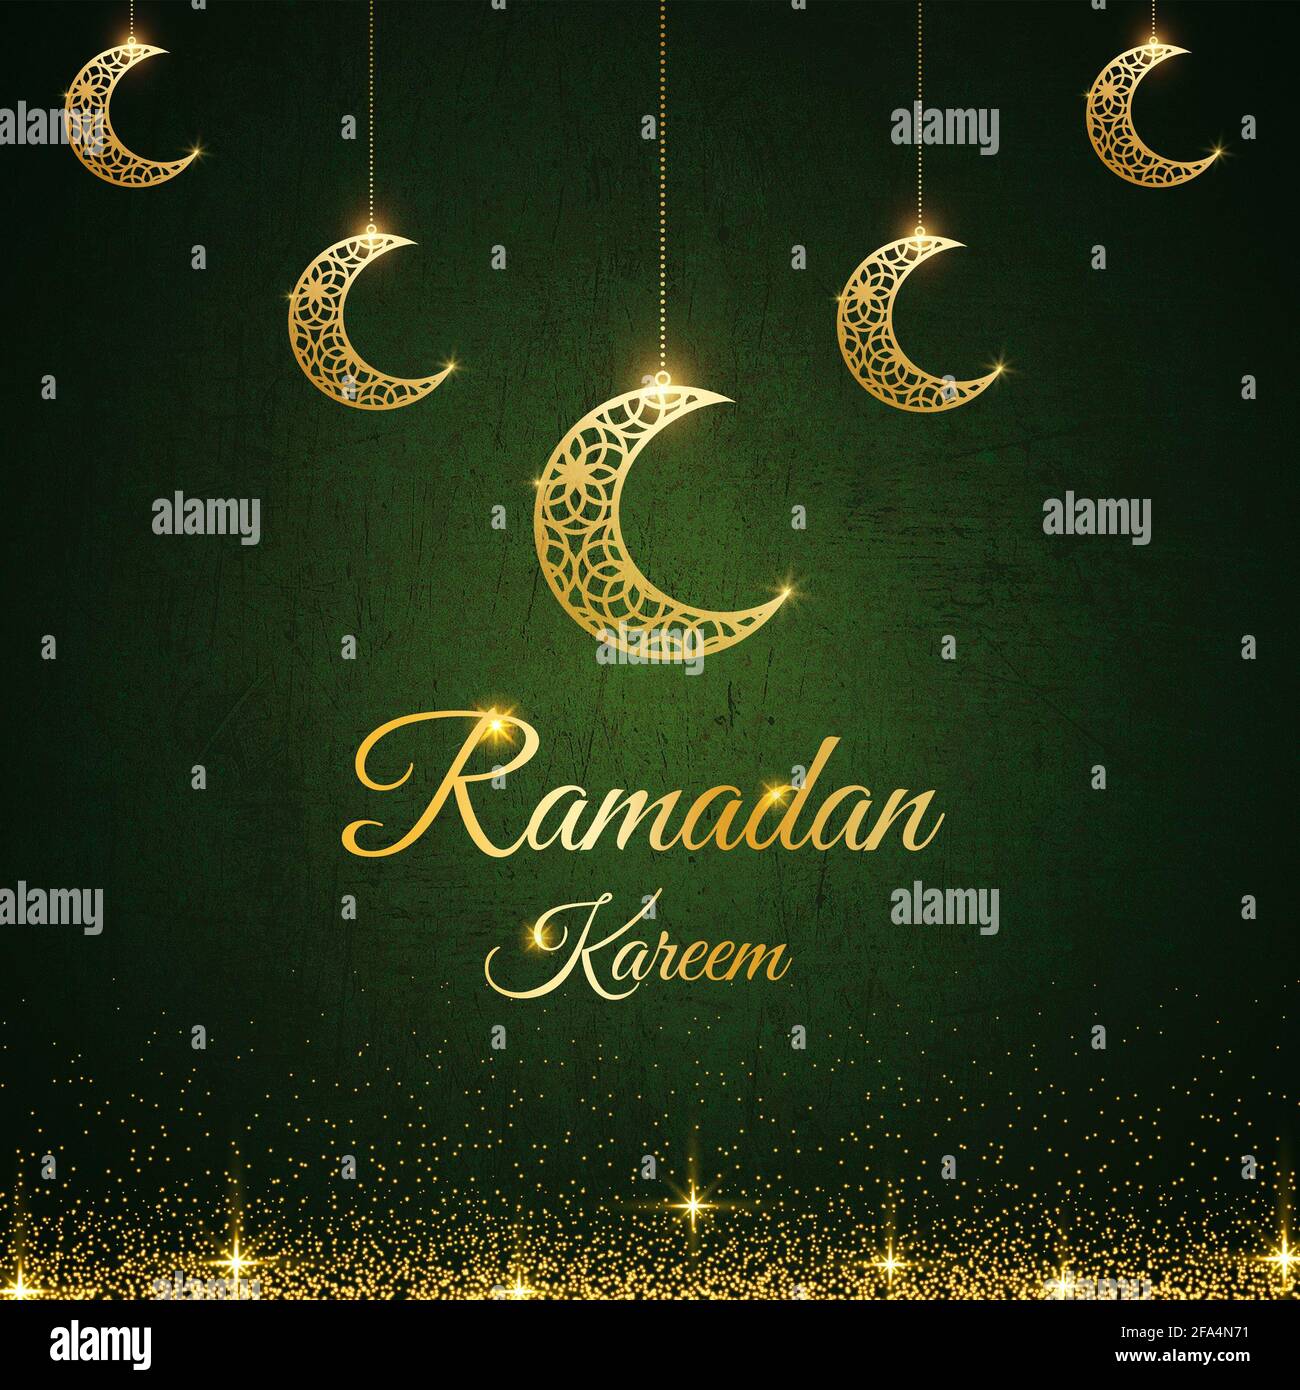 Ramadan kareem beautiful social media banner template Stock Photo - Alamy